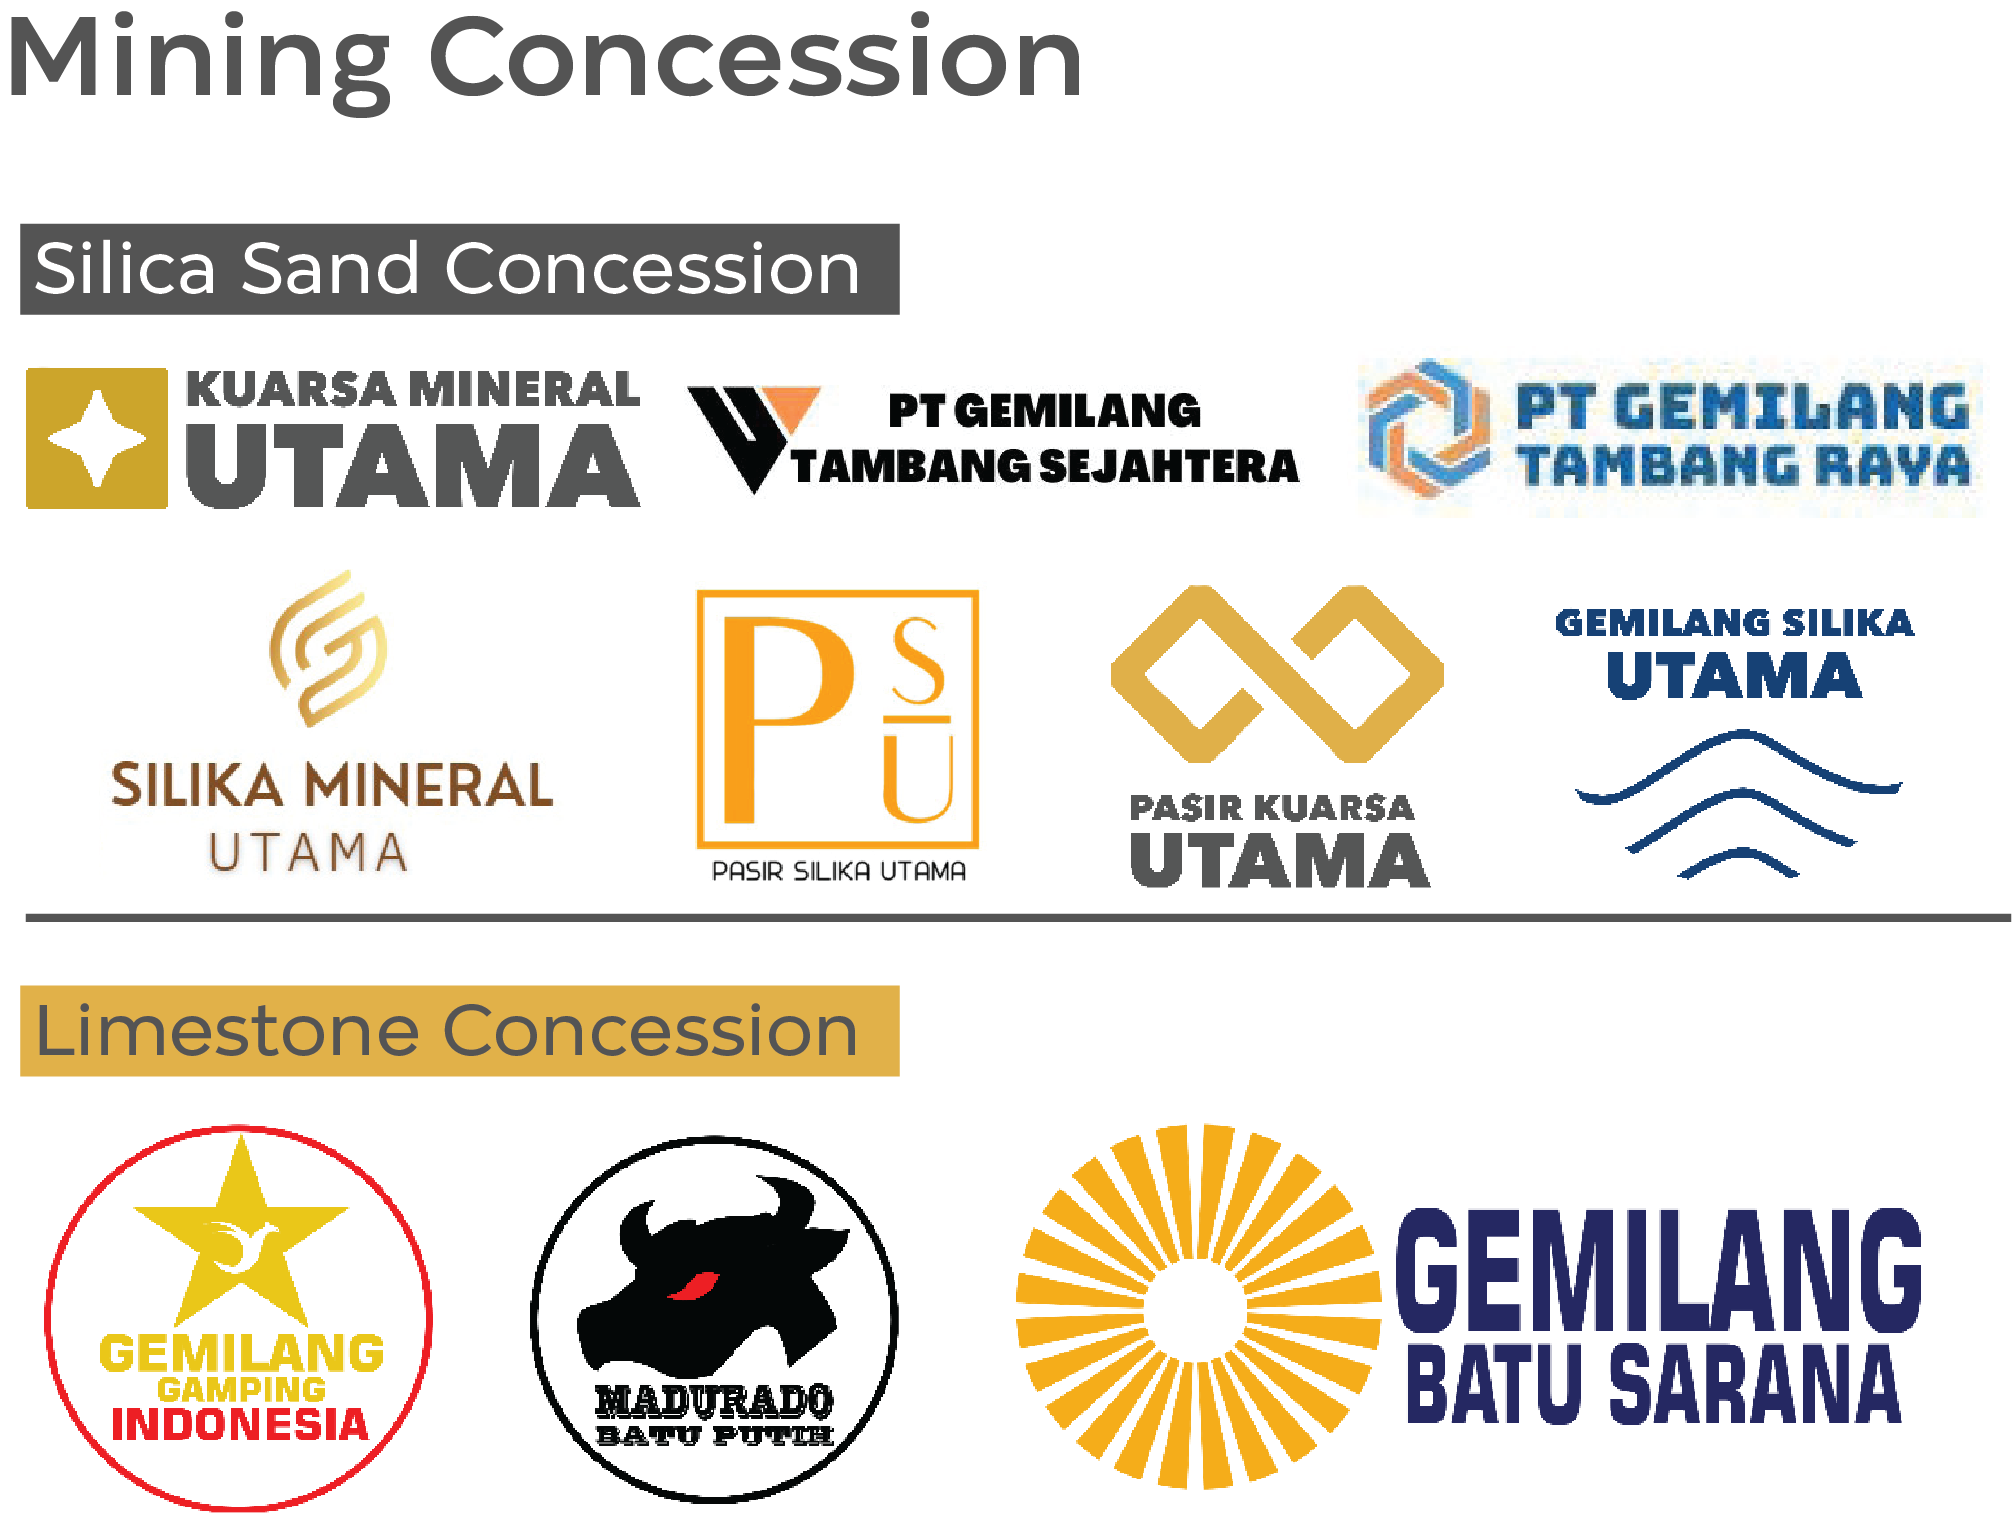 Mining Concession